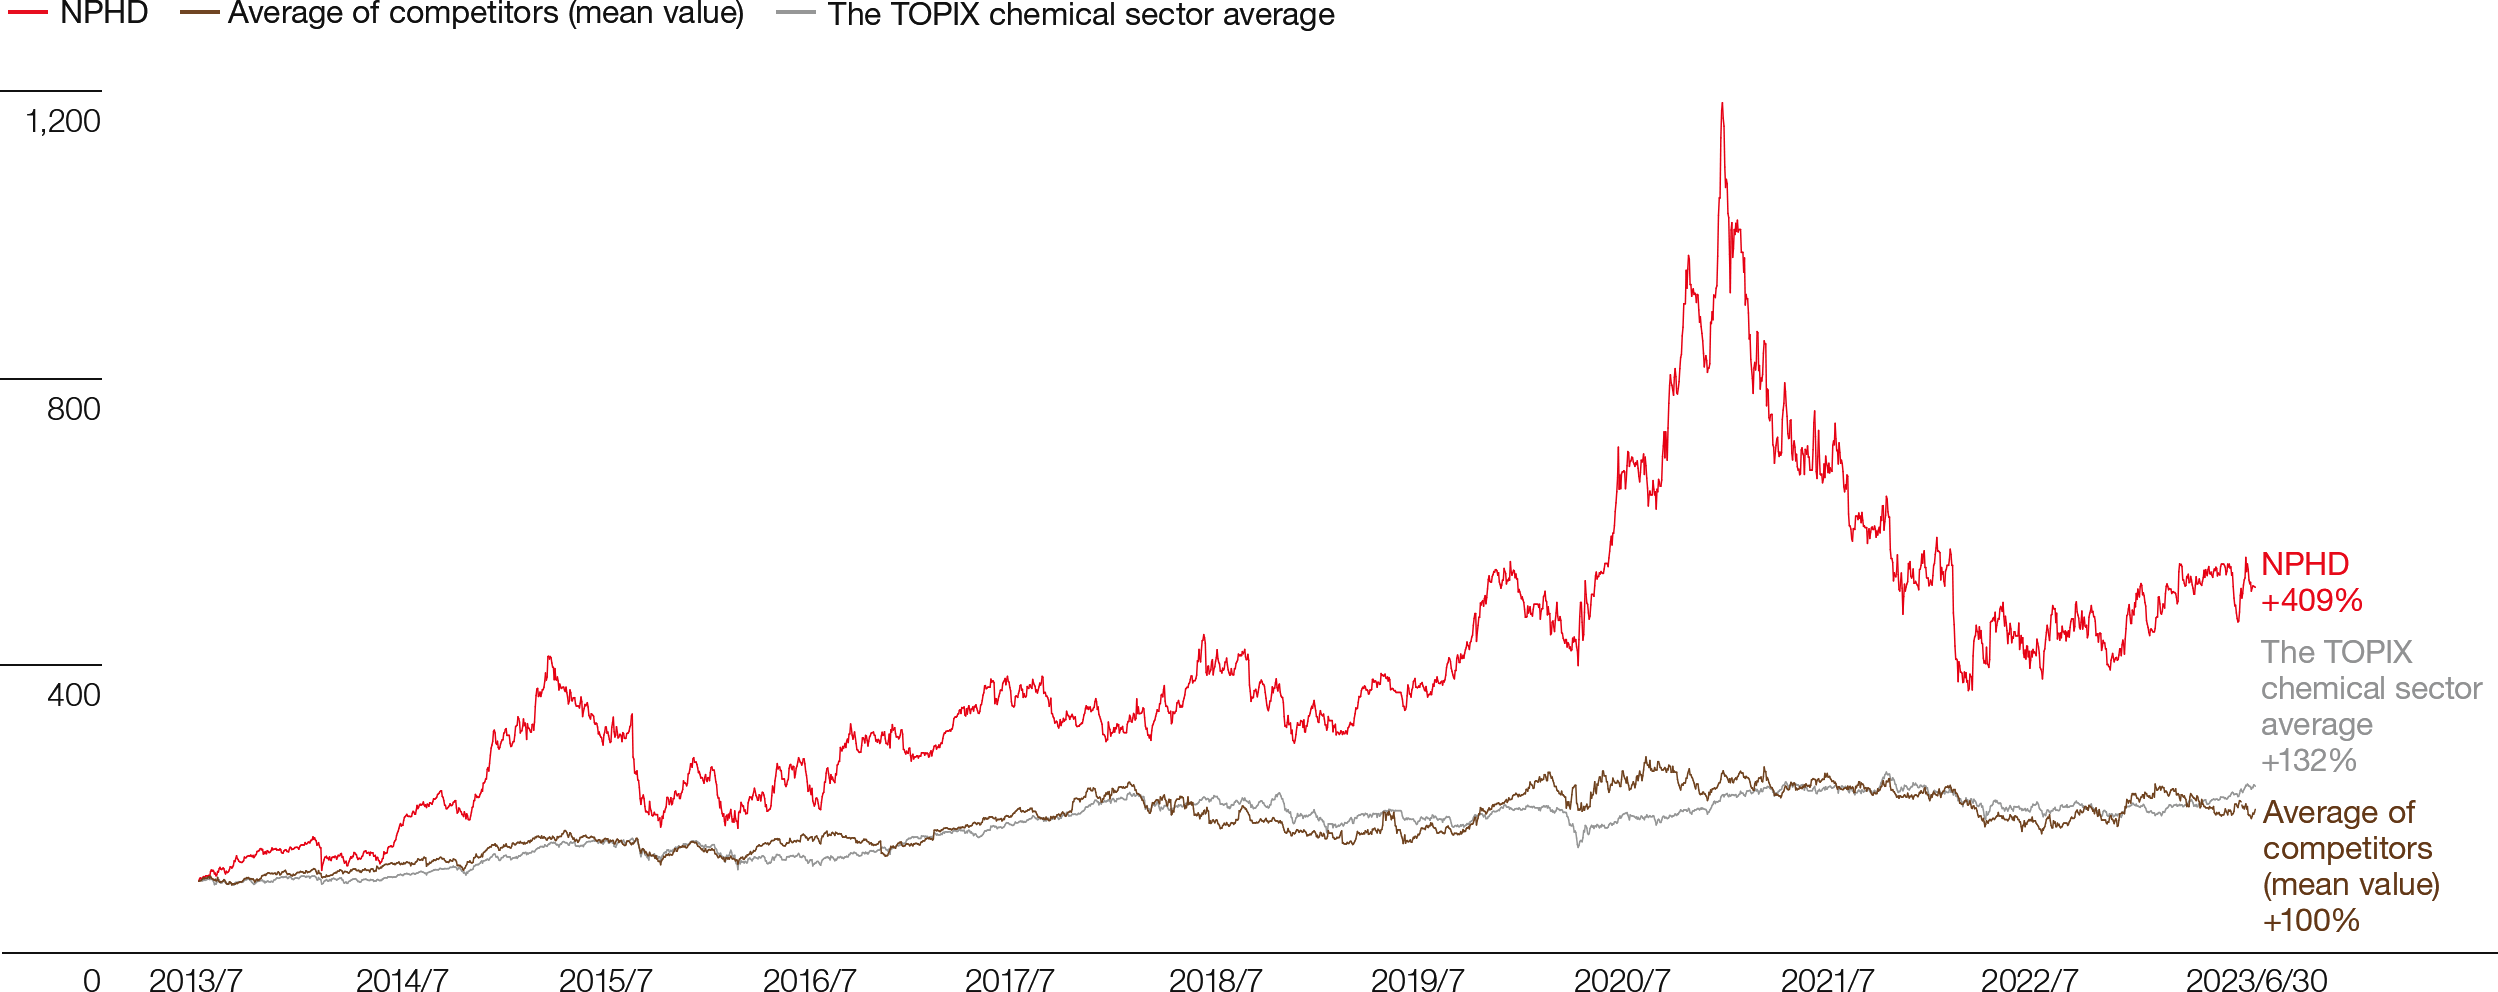 Historical stock price of NPHD